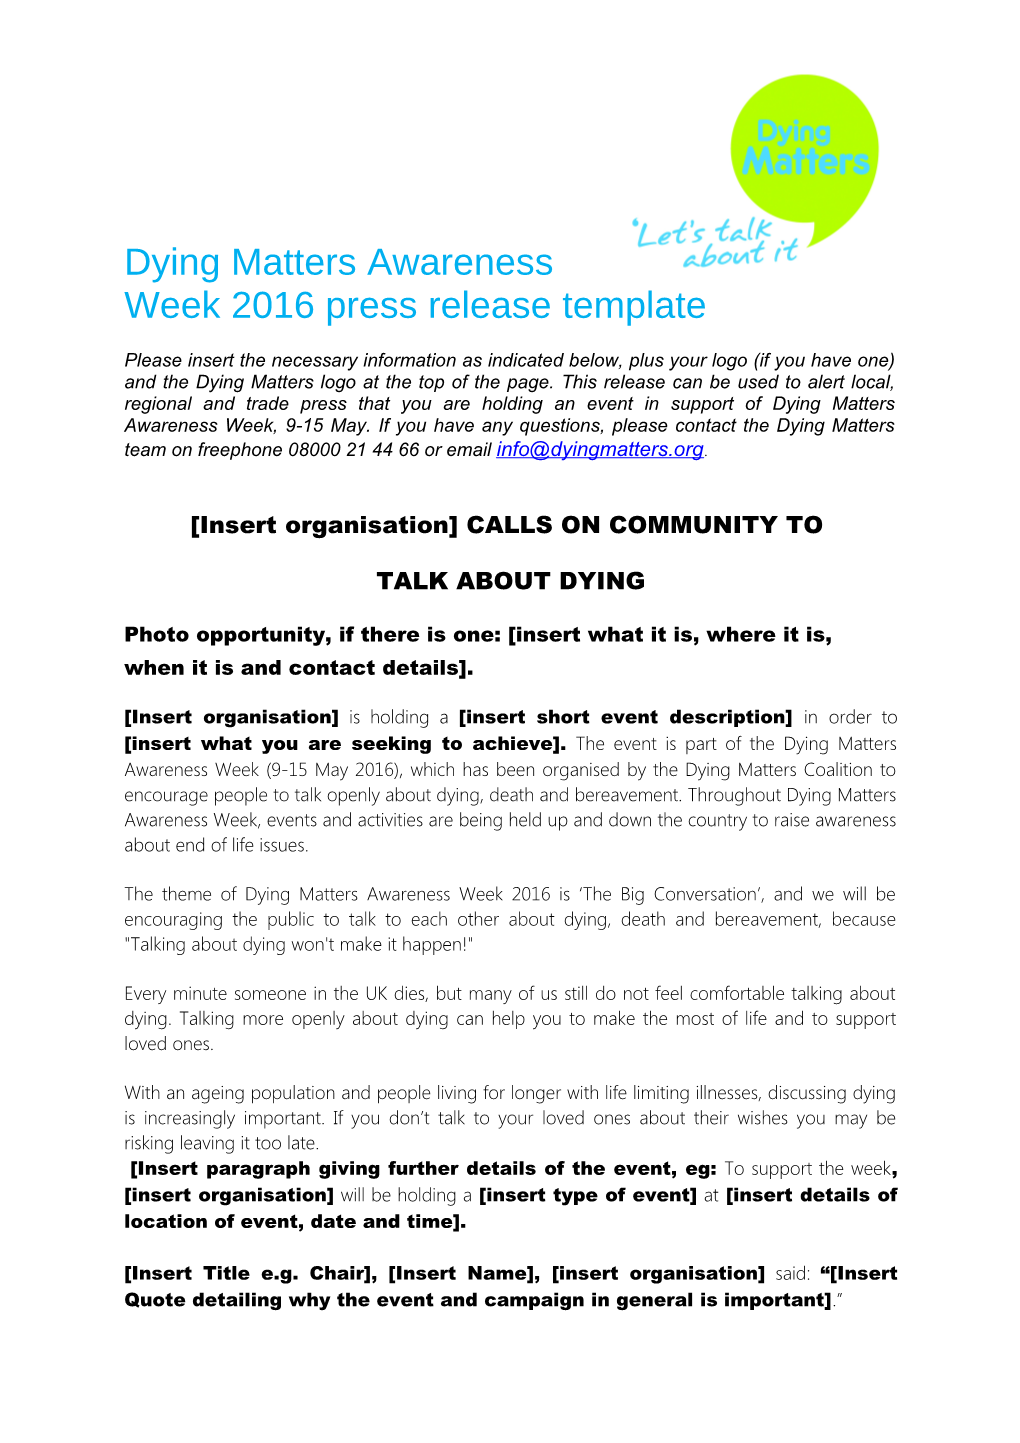 Dying Matters Awareness Week 2016 Press Release Template